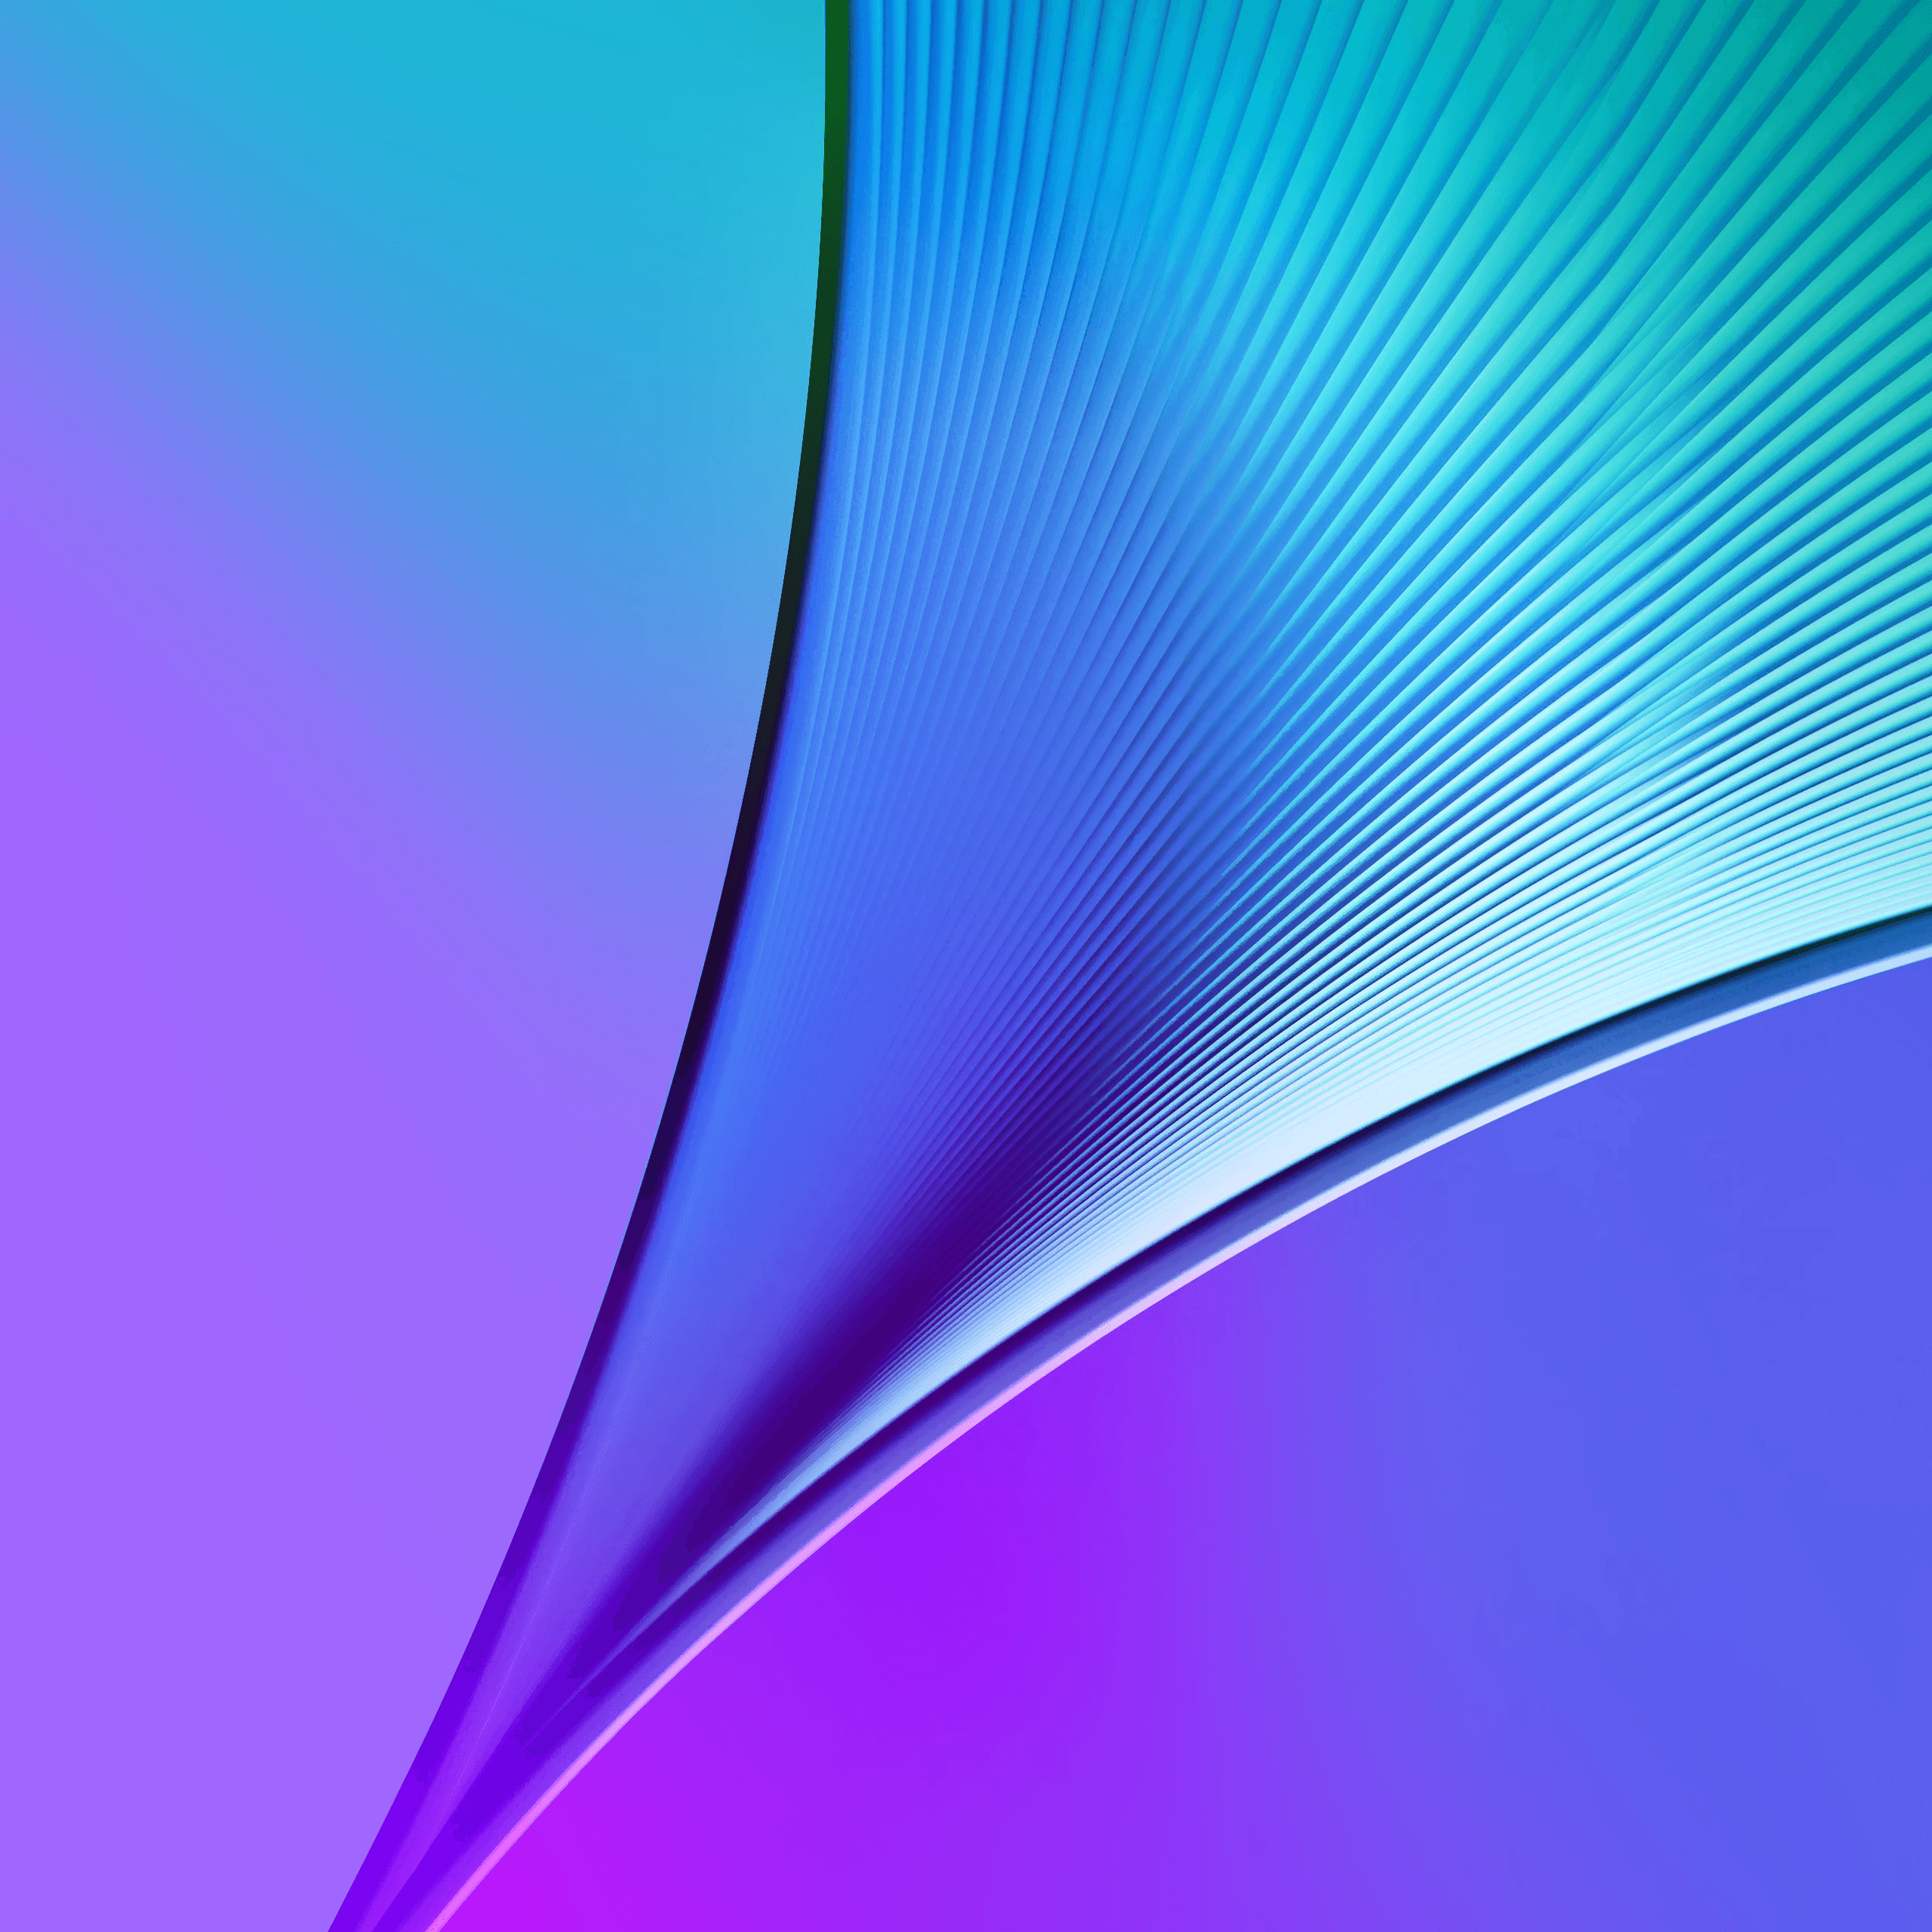 Samsung Edge Wallpapers